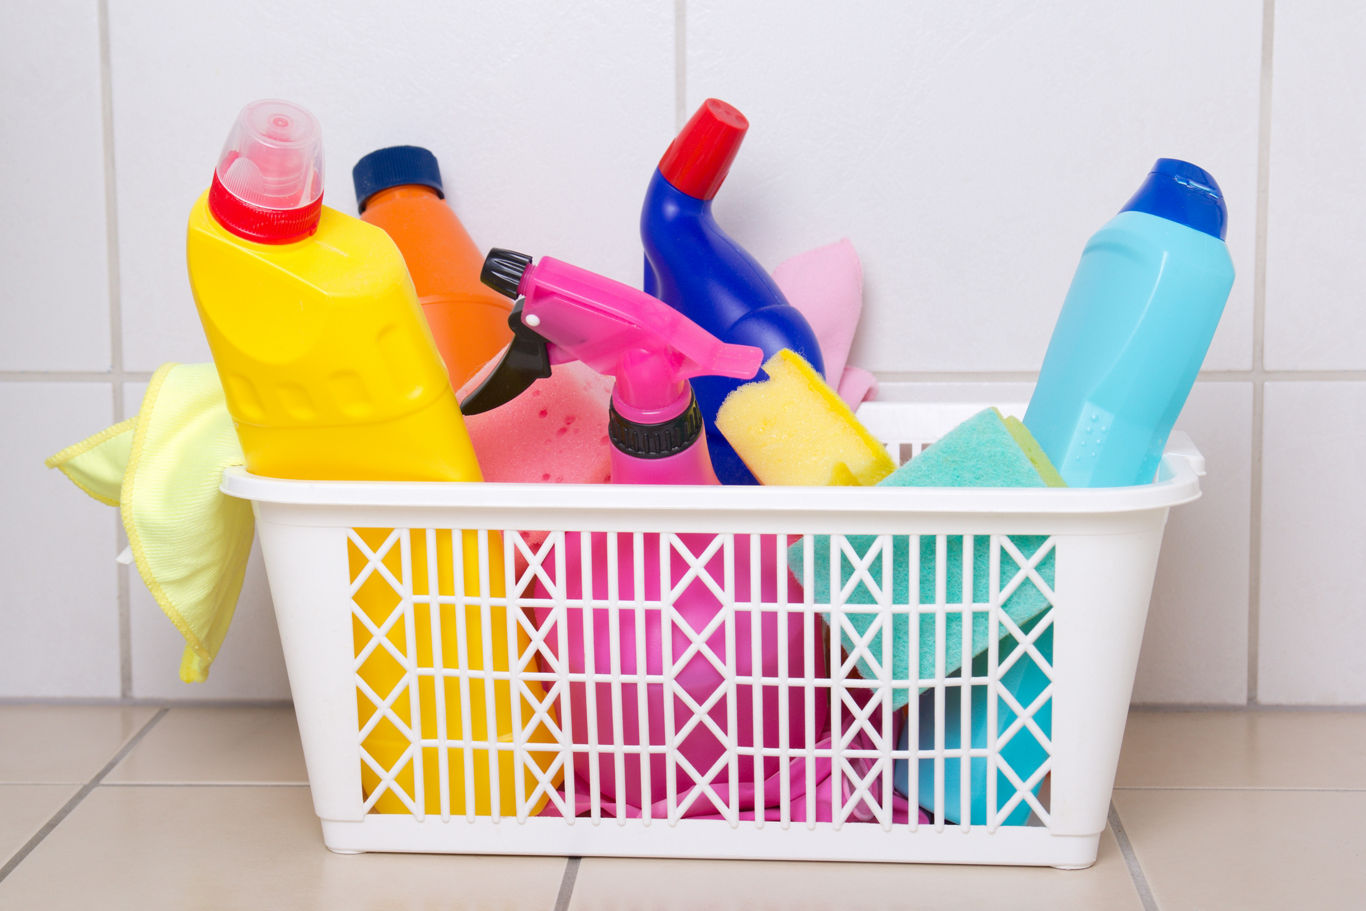 Cleaning Supplies in Bathroom | Blog | Greystar